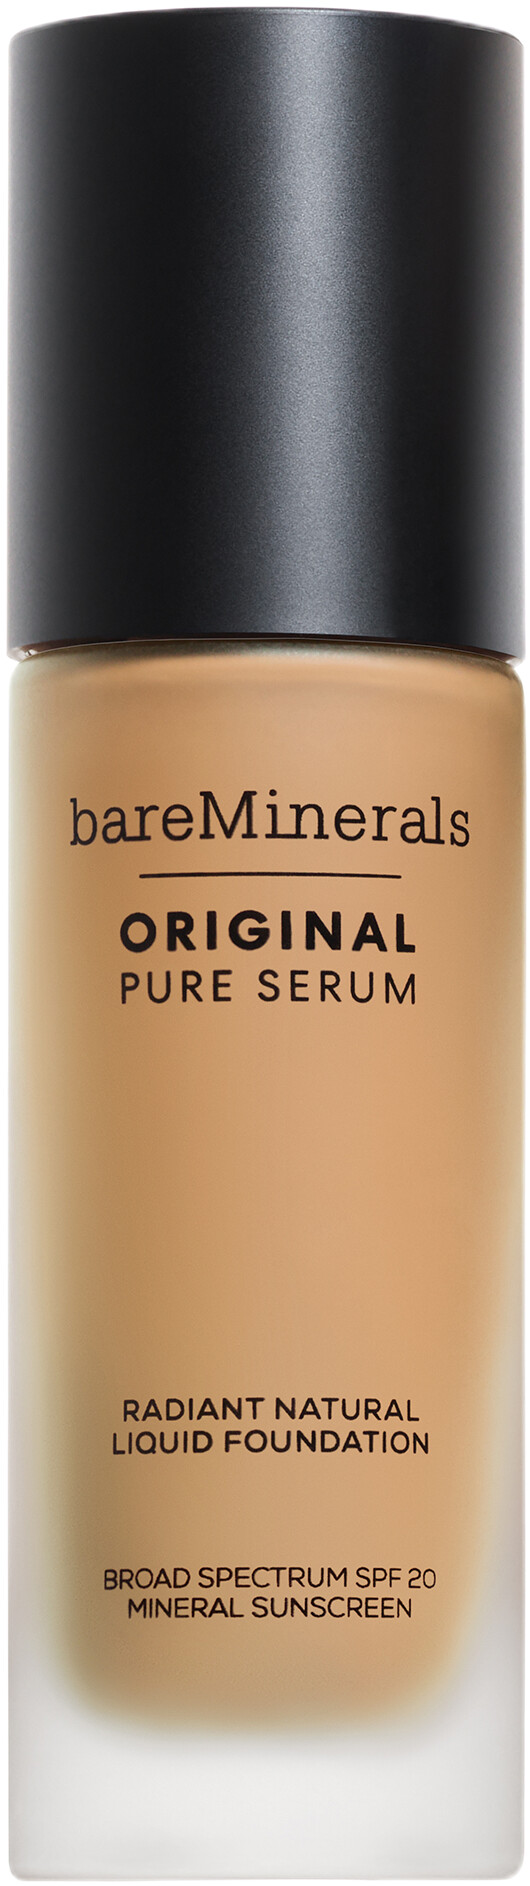 bareMinerals Original Pure Serum Radiant Natural Liquid Foundation SPF20 30ml 2.5 - Light Warm